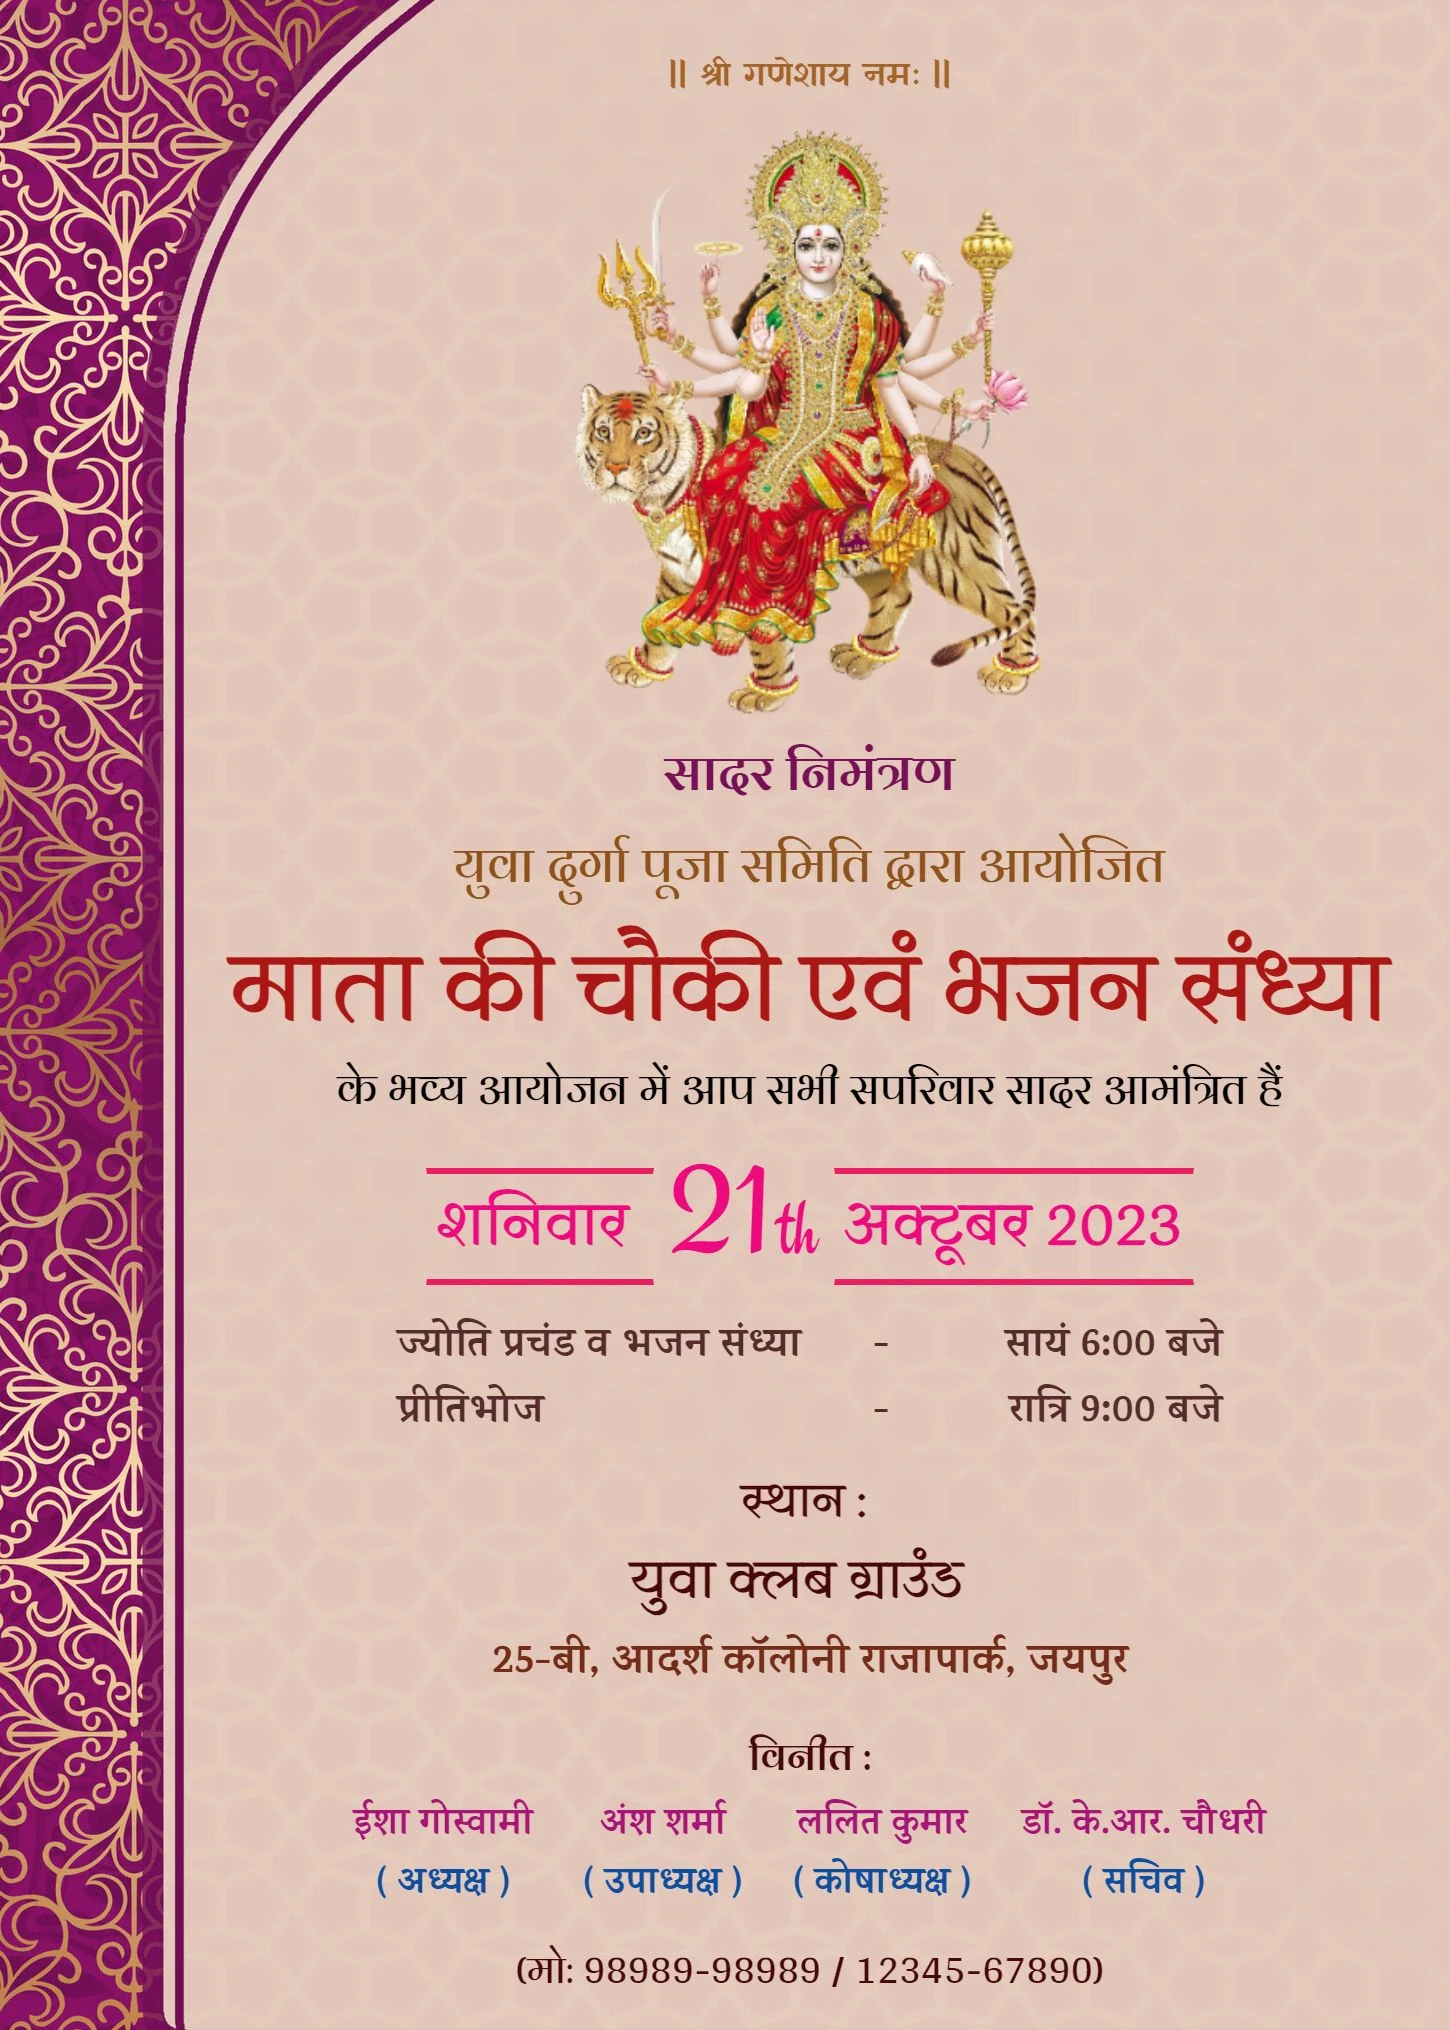 Invitation card for Mata Ki Chowki in light color with golden design on deep magenta border on left side